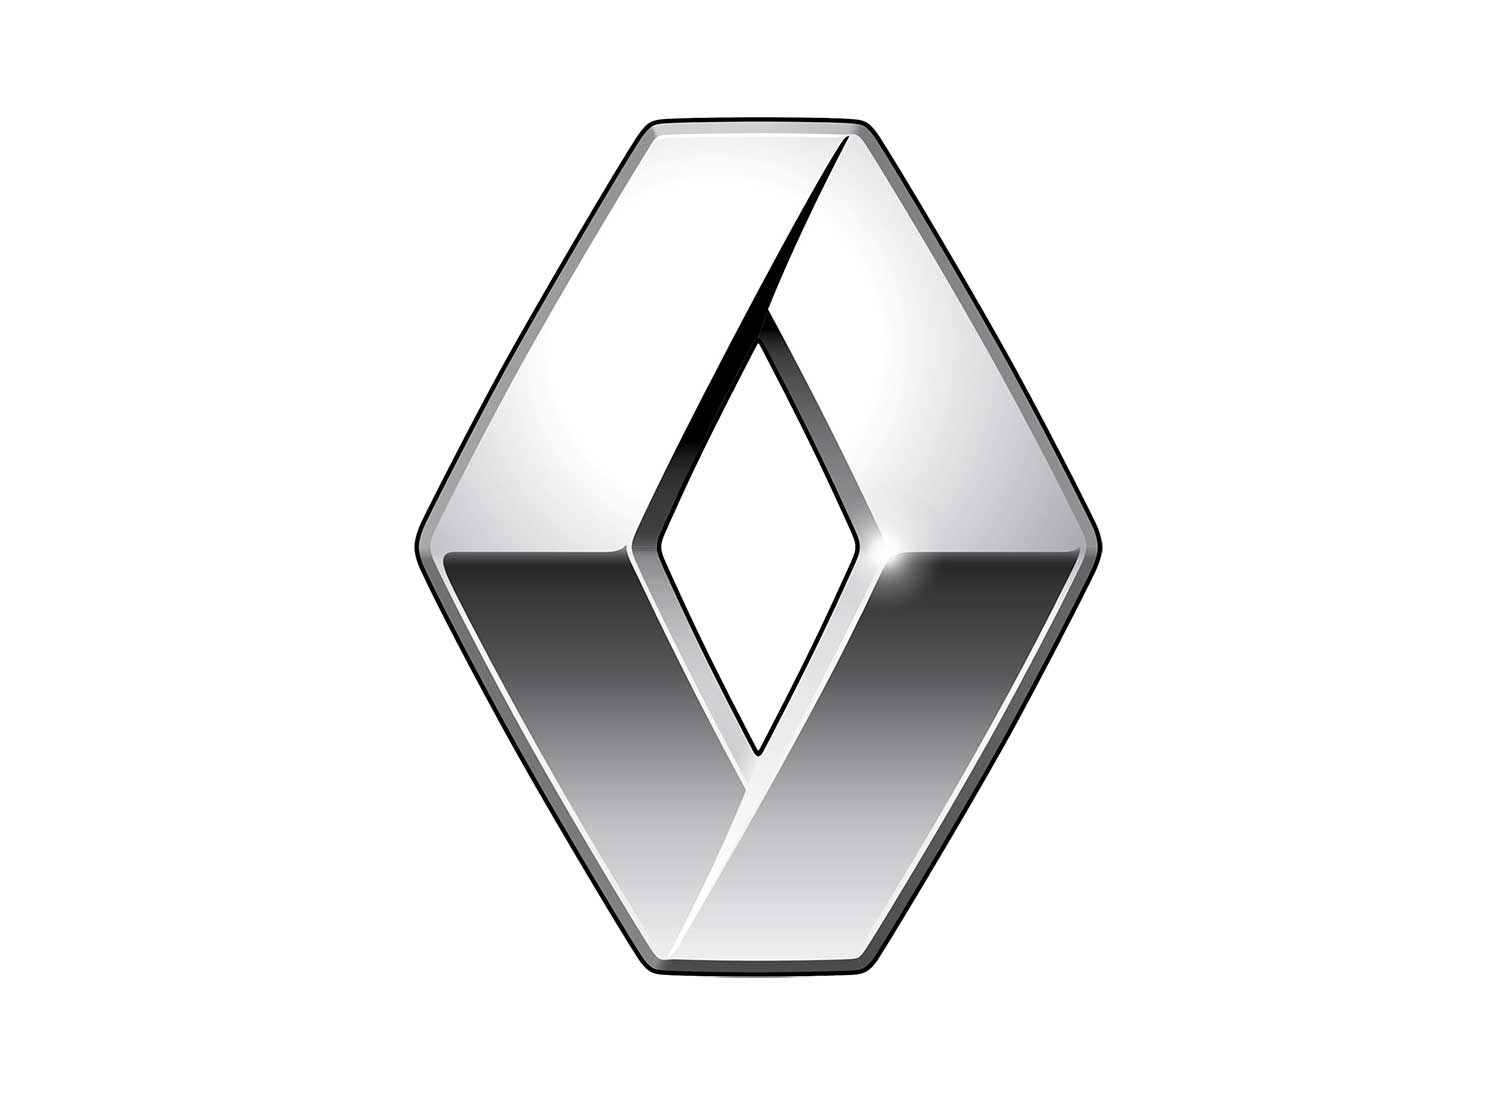 Renault logo - Before